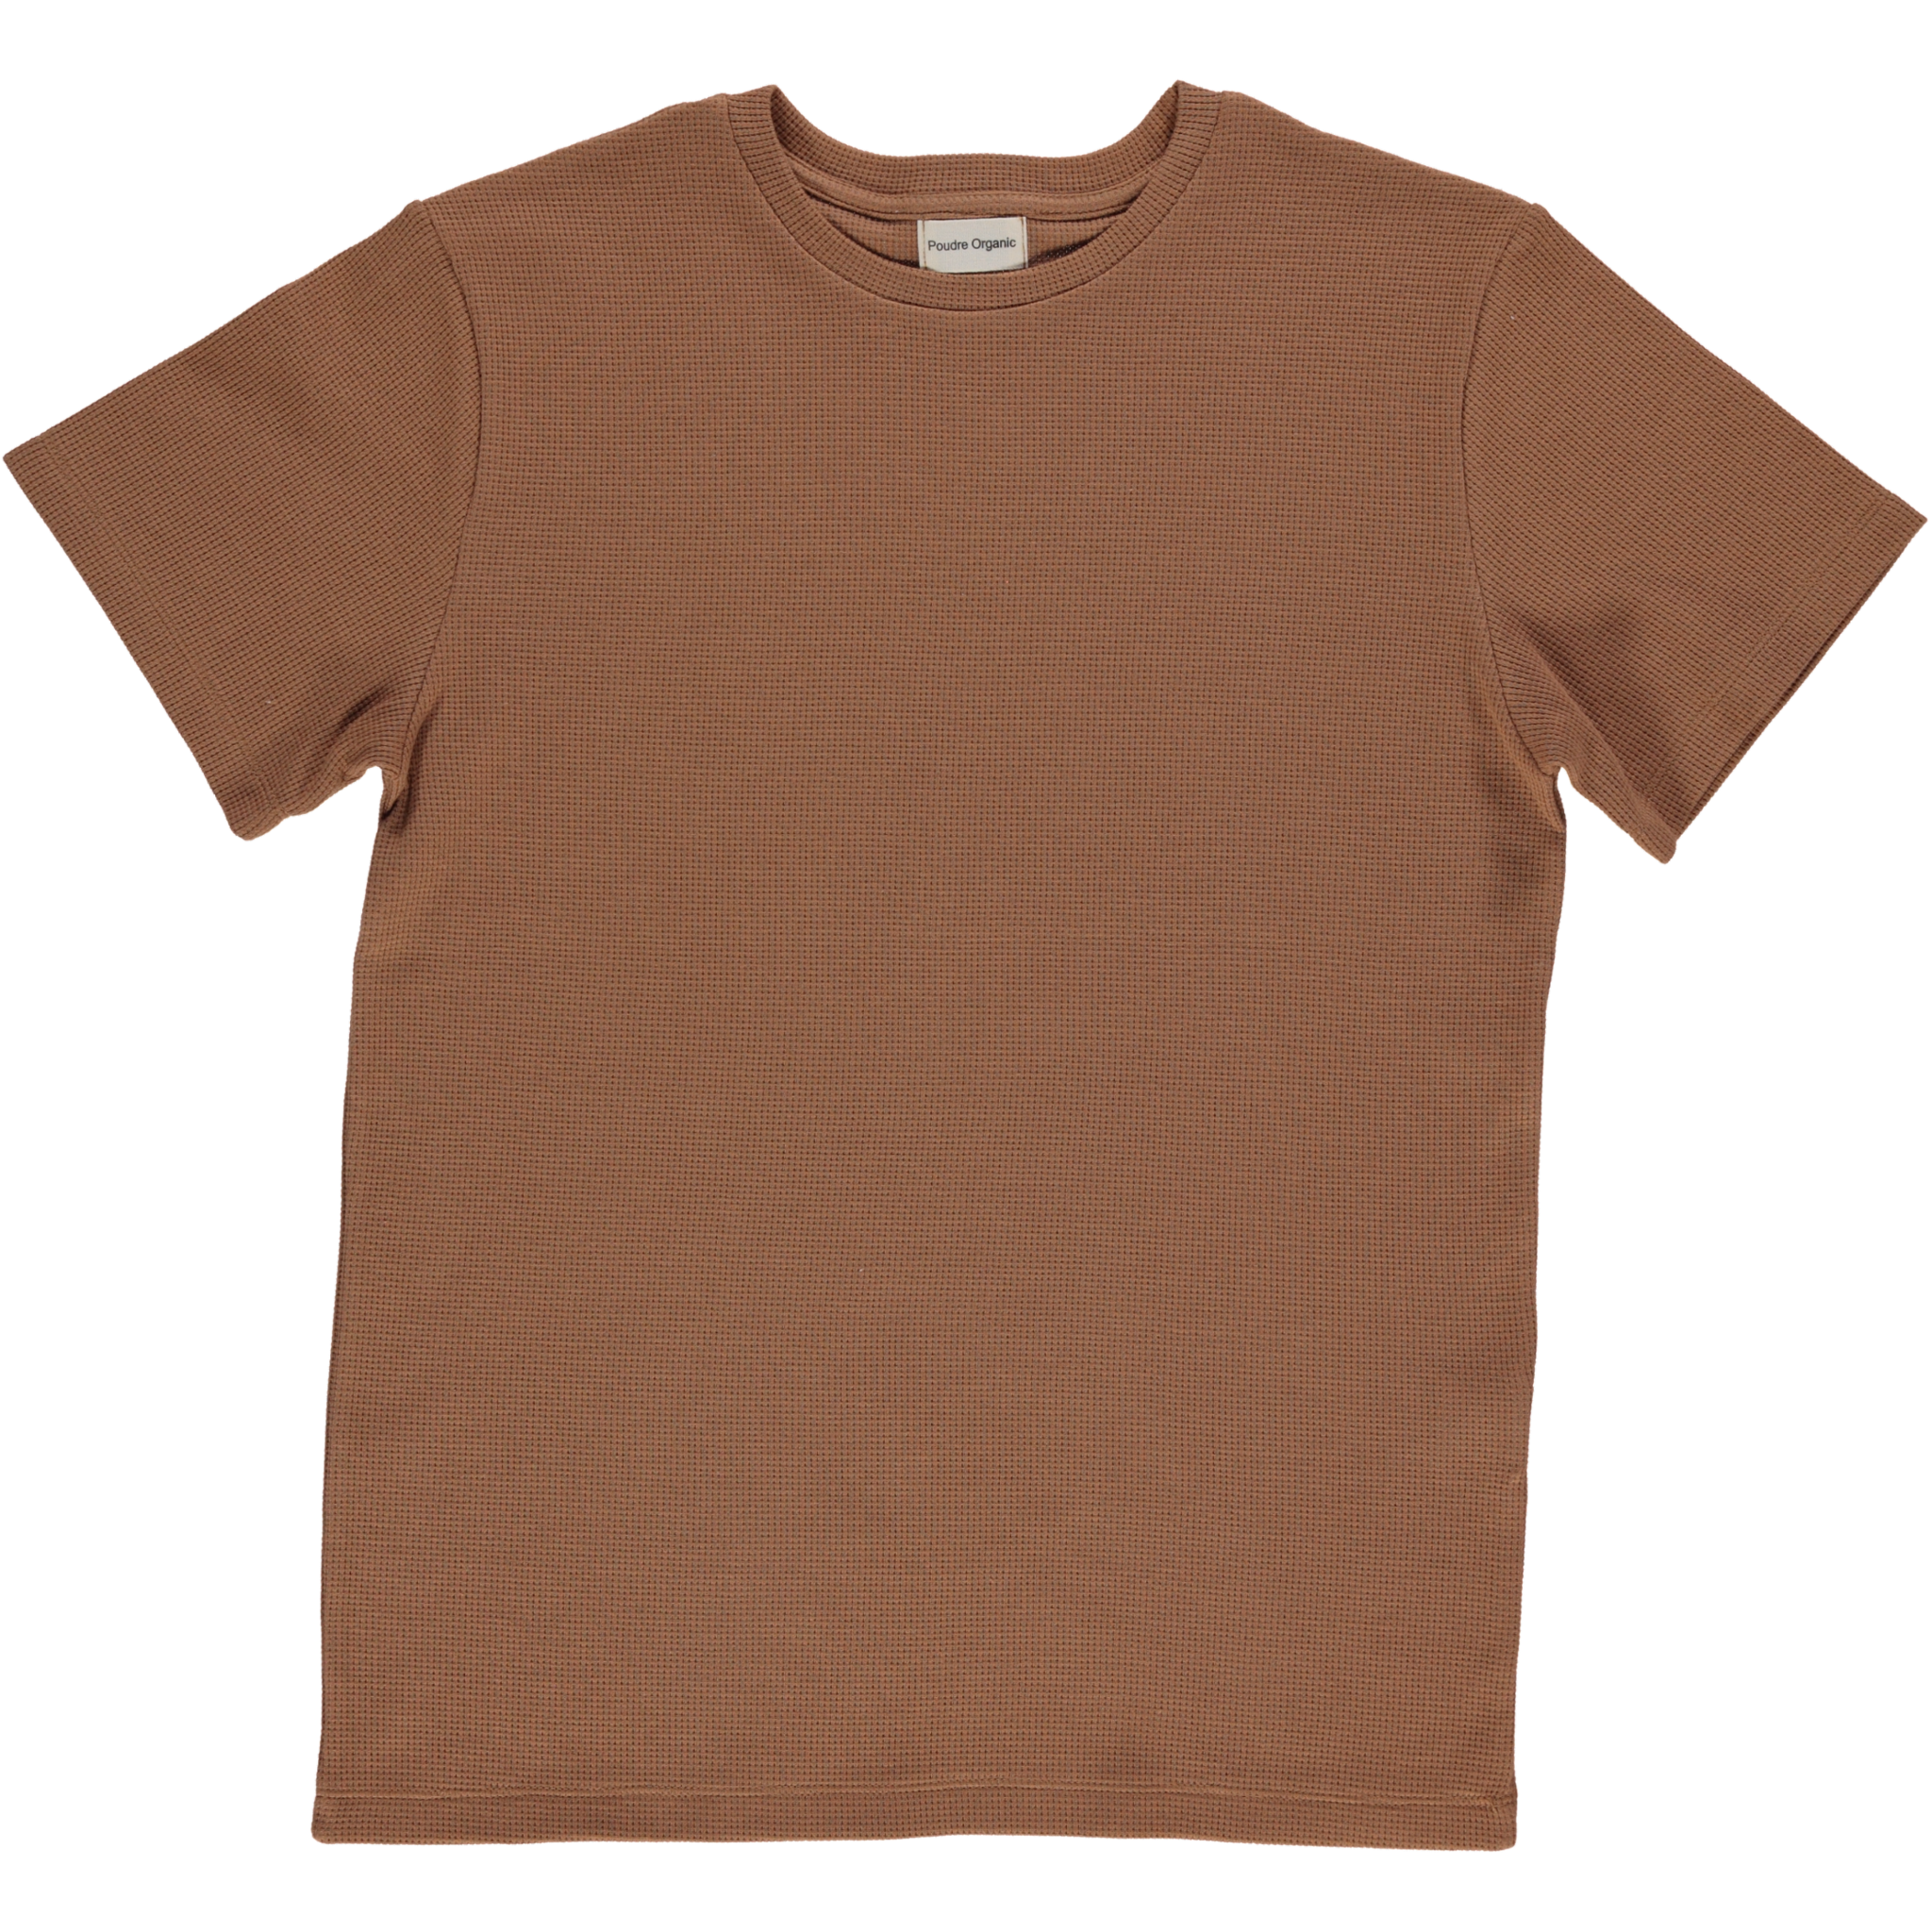 T-Shirt Camiseta nid d'abeille [Nuthatch]